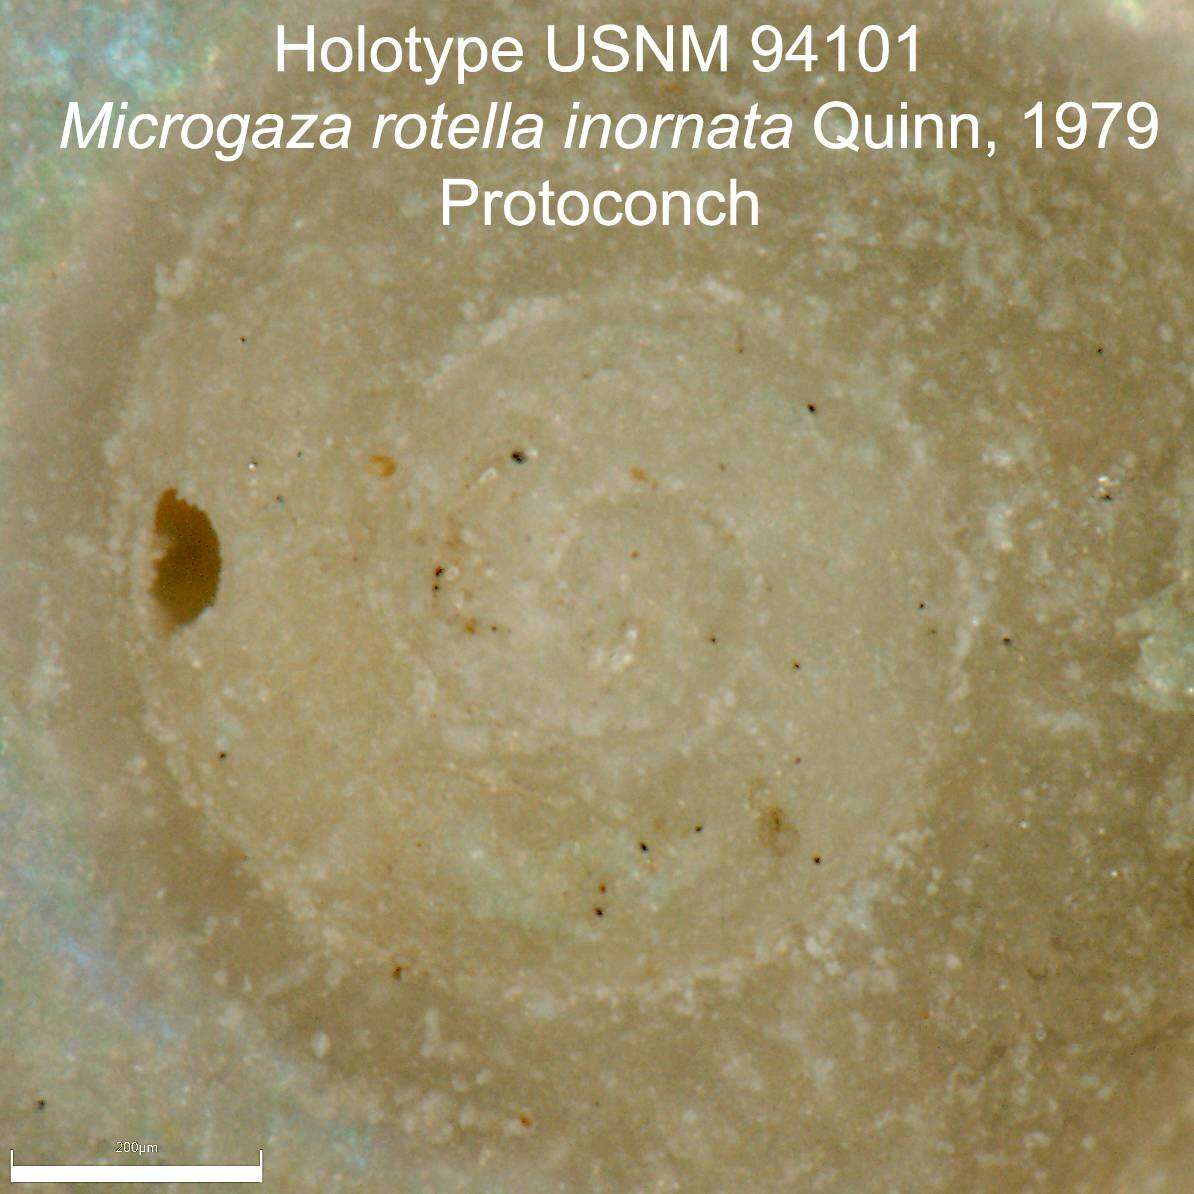 Image of Microgaza rotella inornata Quinn 1979